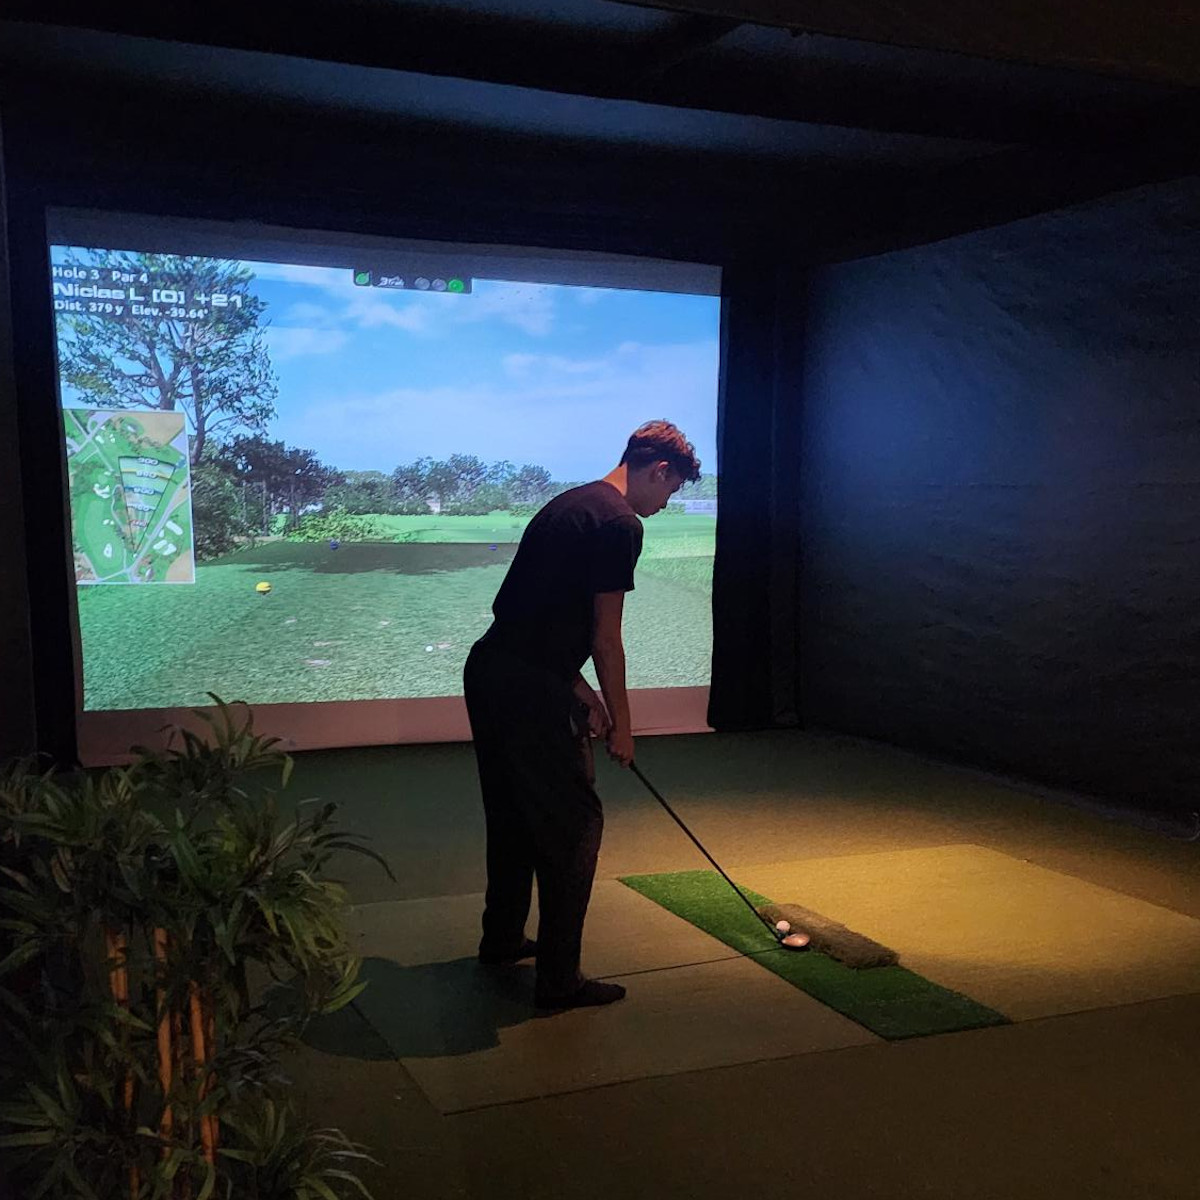 Simulator golf